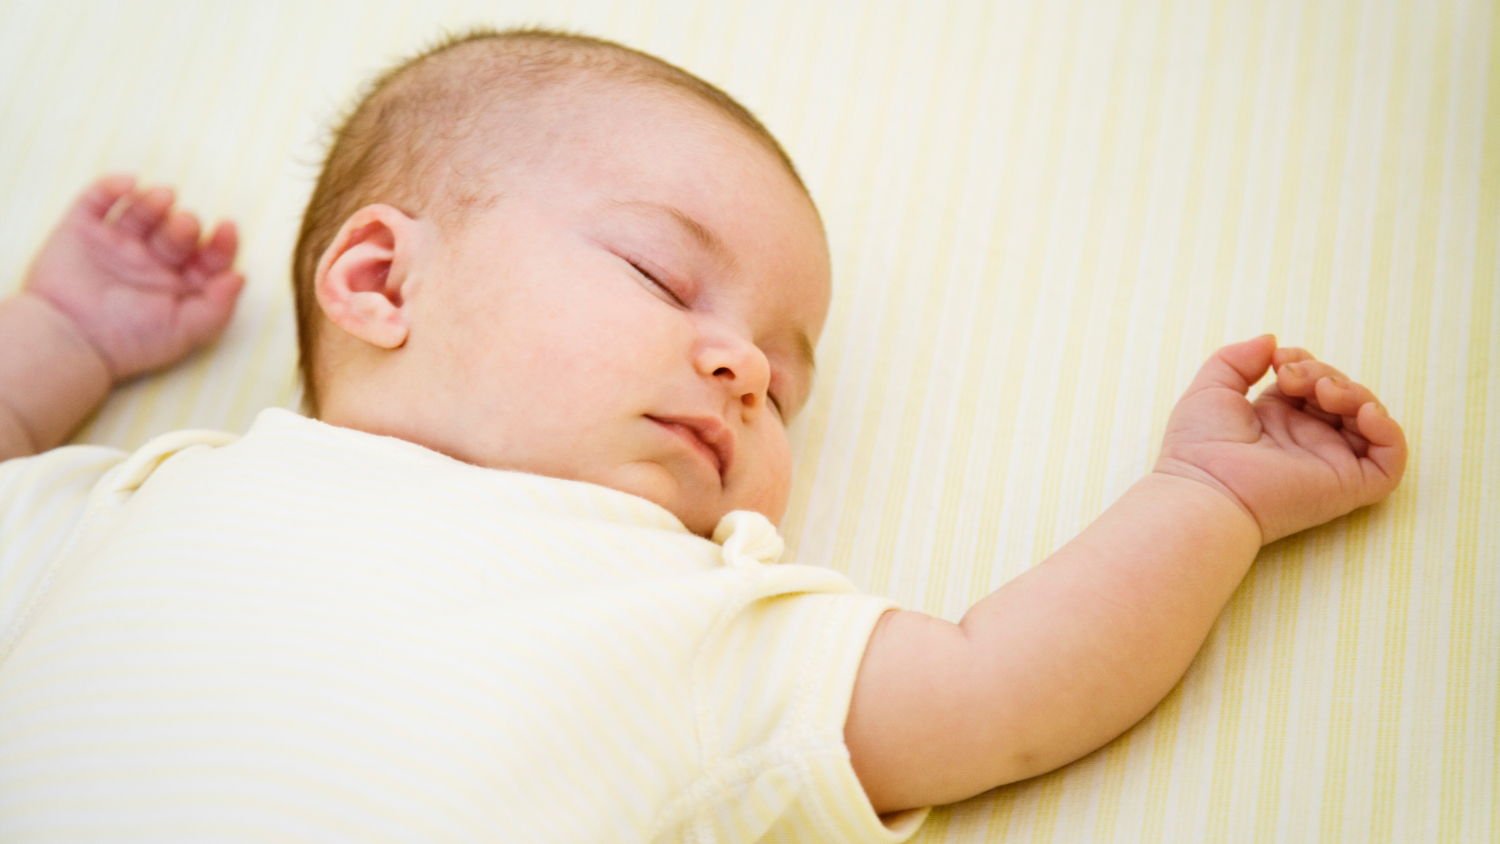 5 month old sleep schedule: Bedtime and nap schedule | Huckleberry